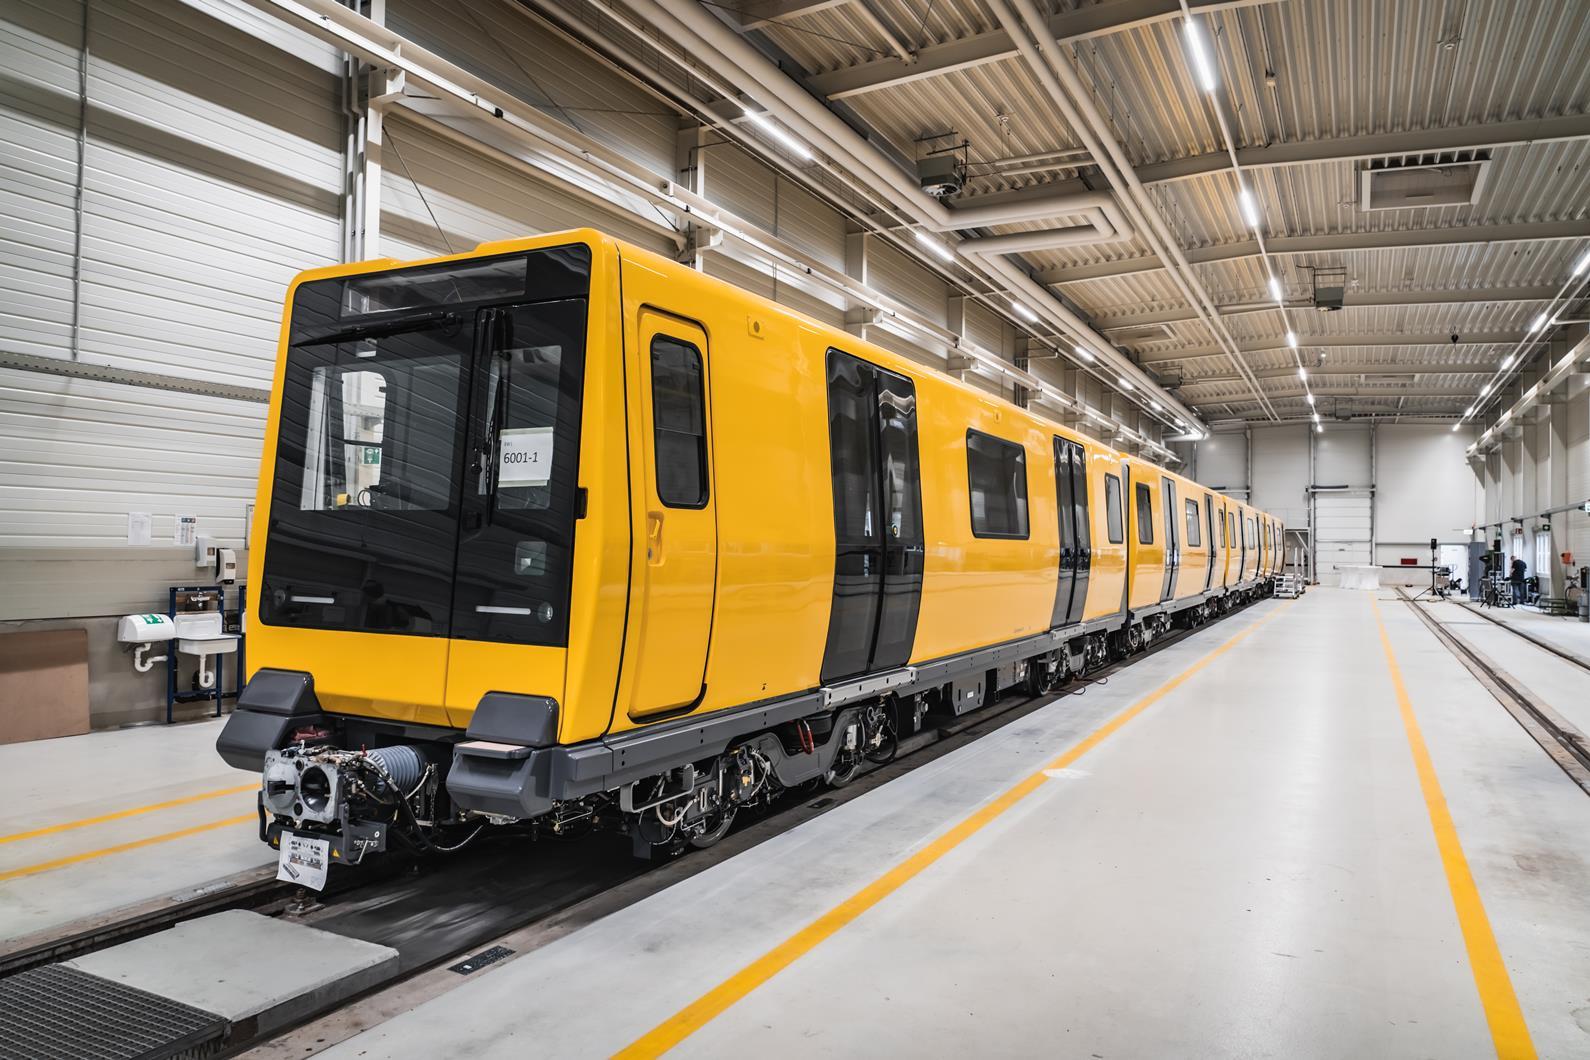 The presentation of the JK-series four-car train at the Stadler service center in Velten